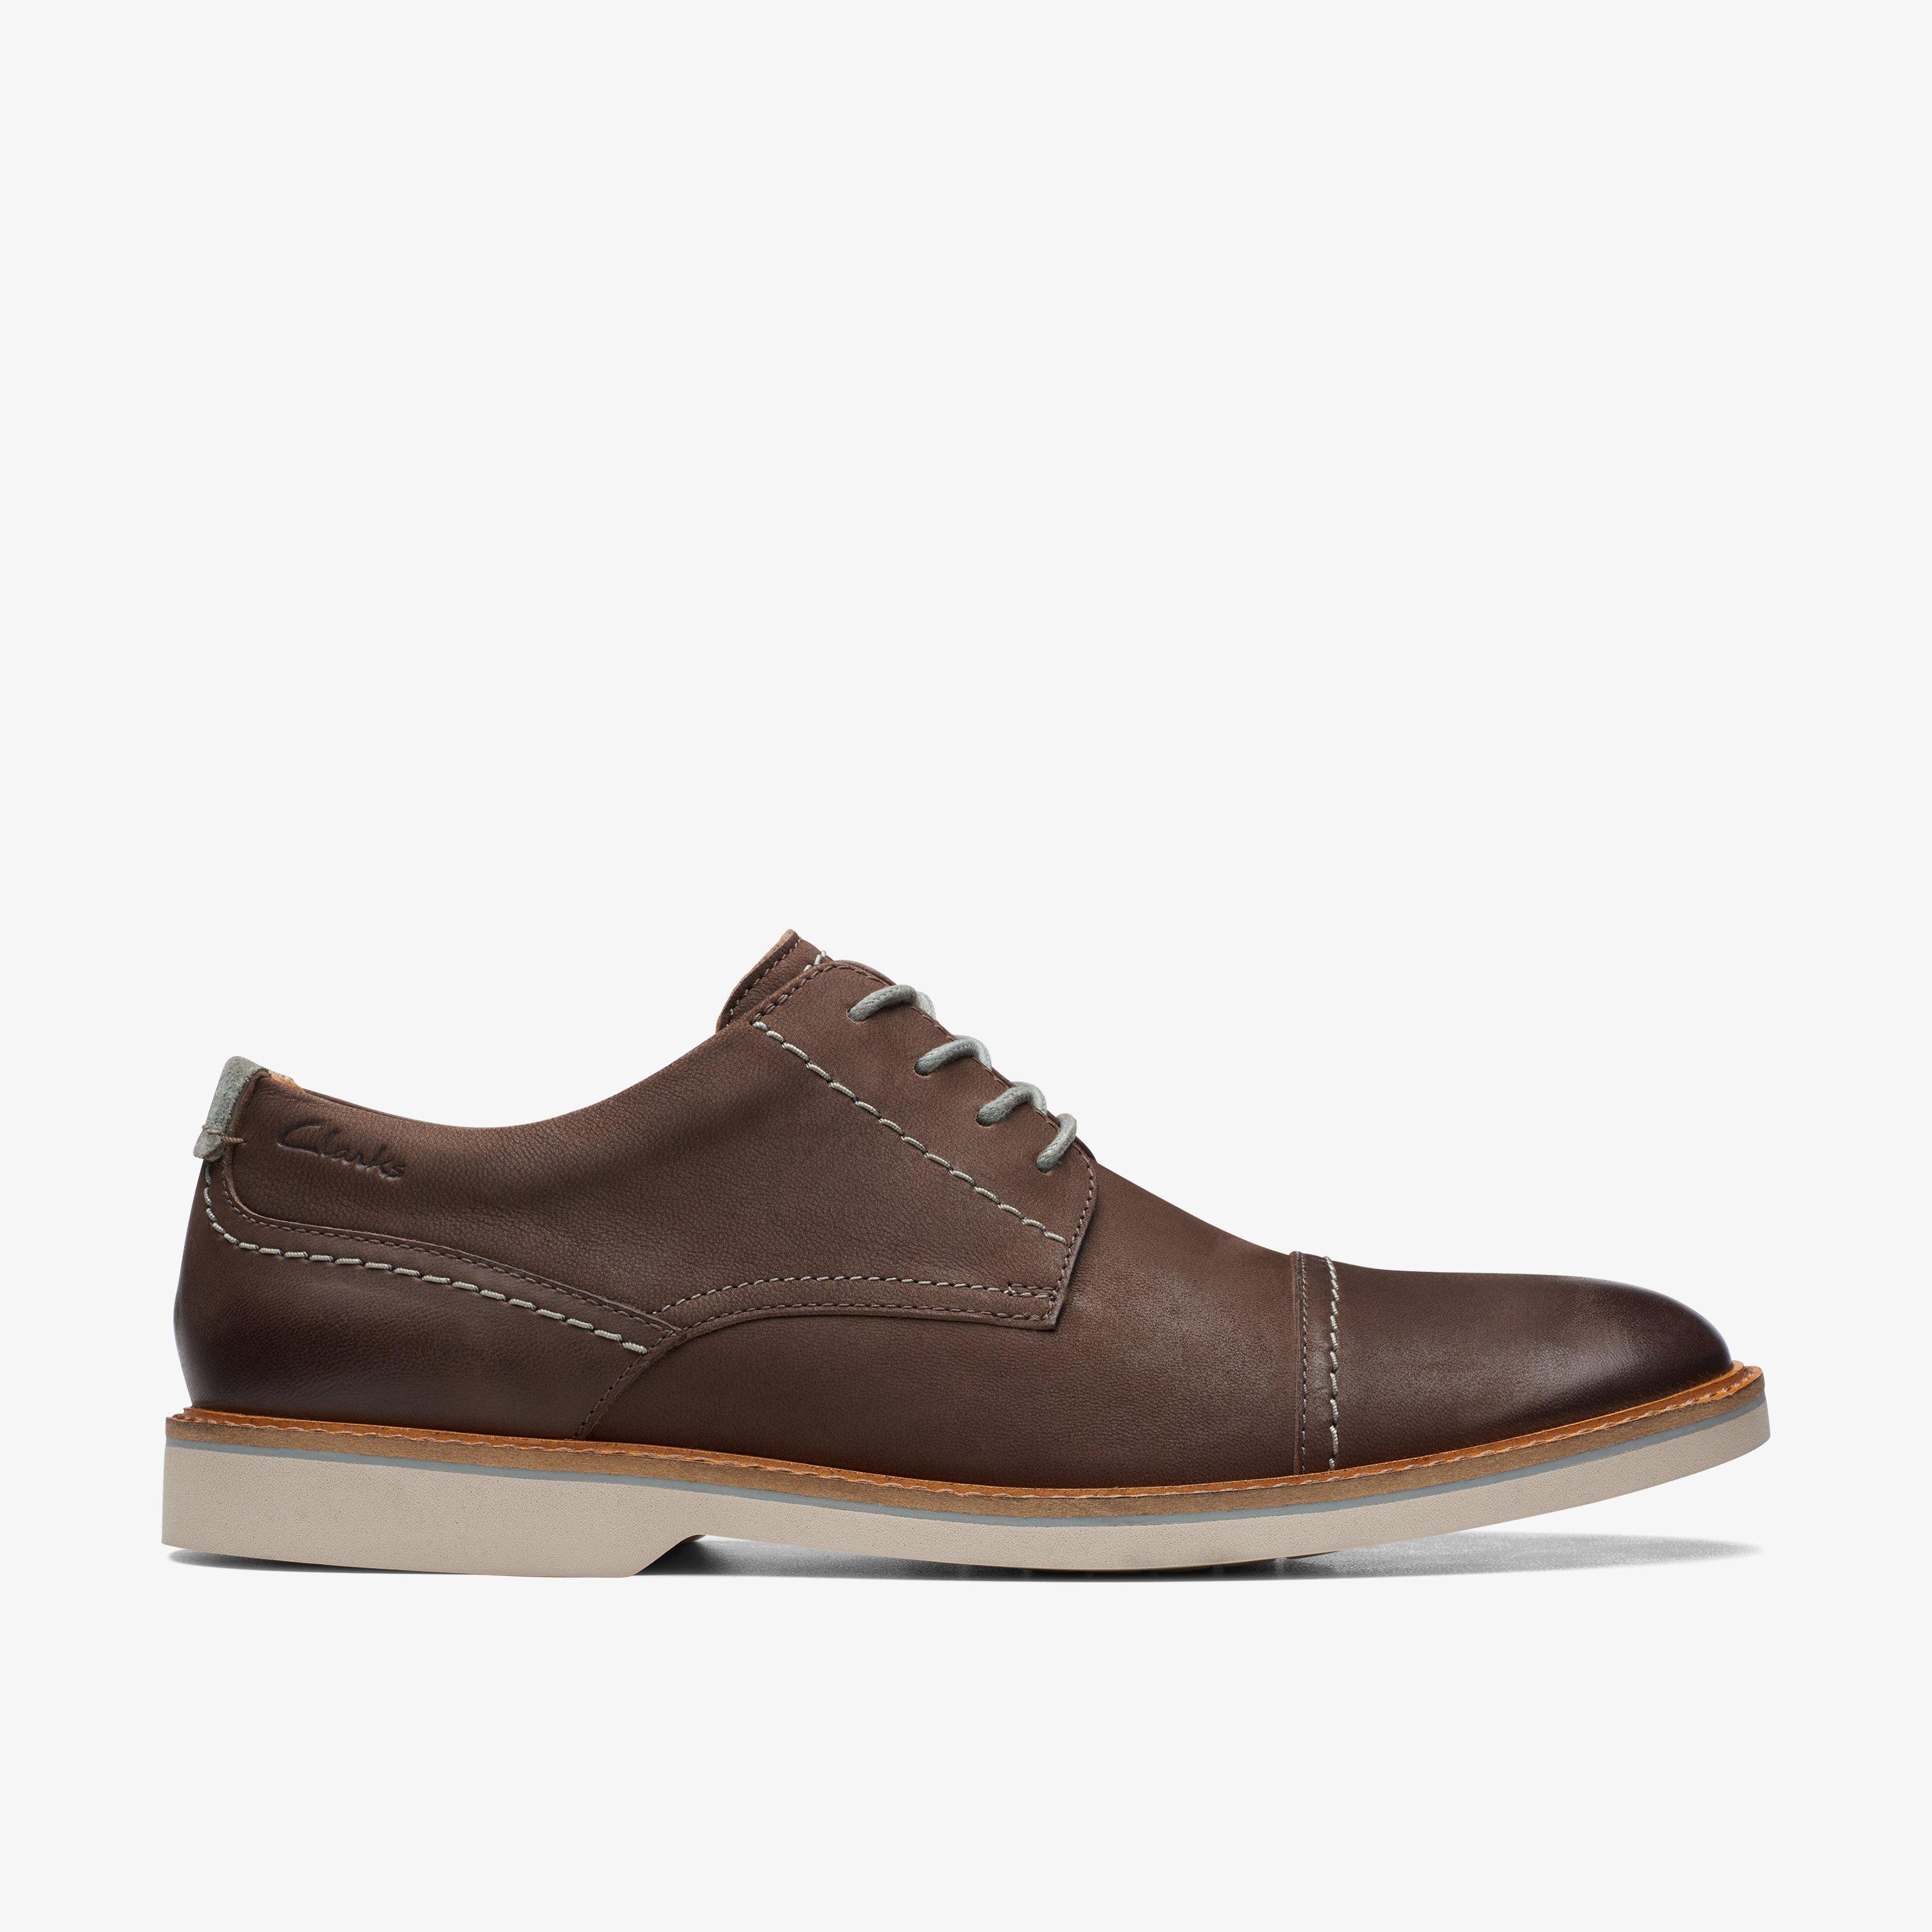 MENS Atticus LT Cap Dark Brown Leather Oxford Shoes | Clarks Outlet